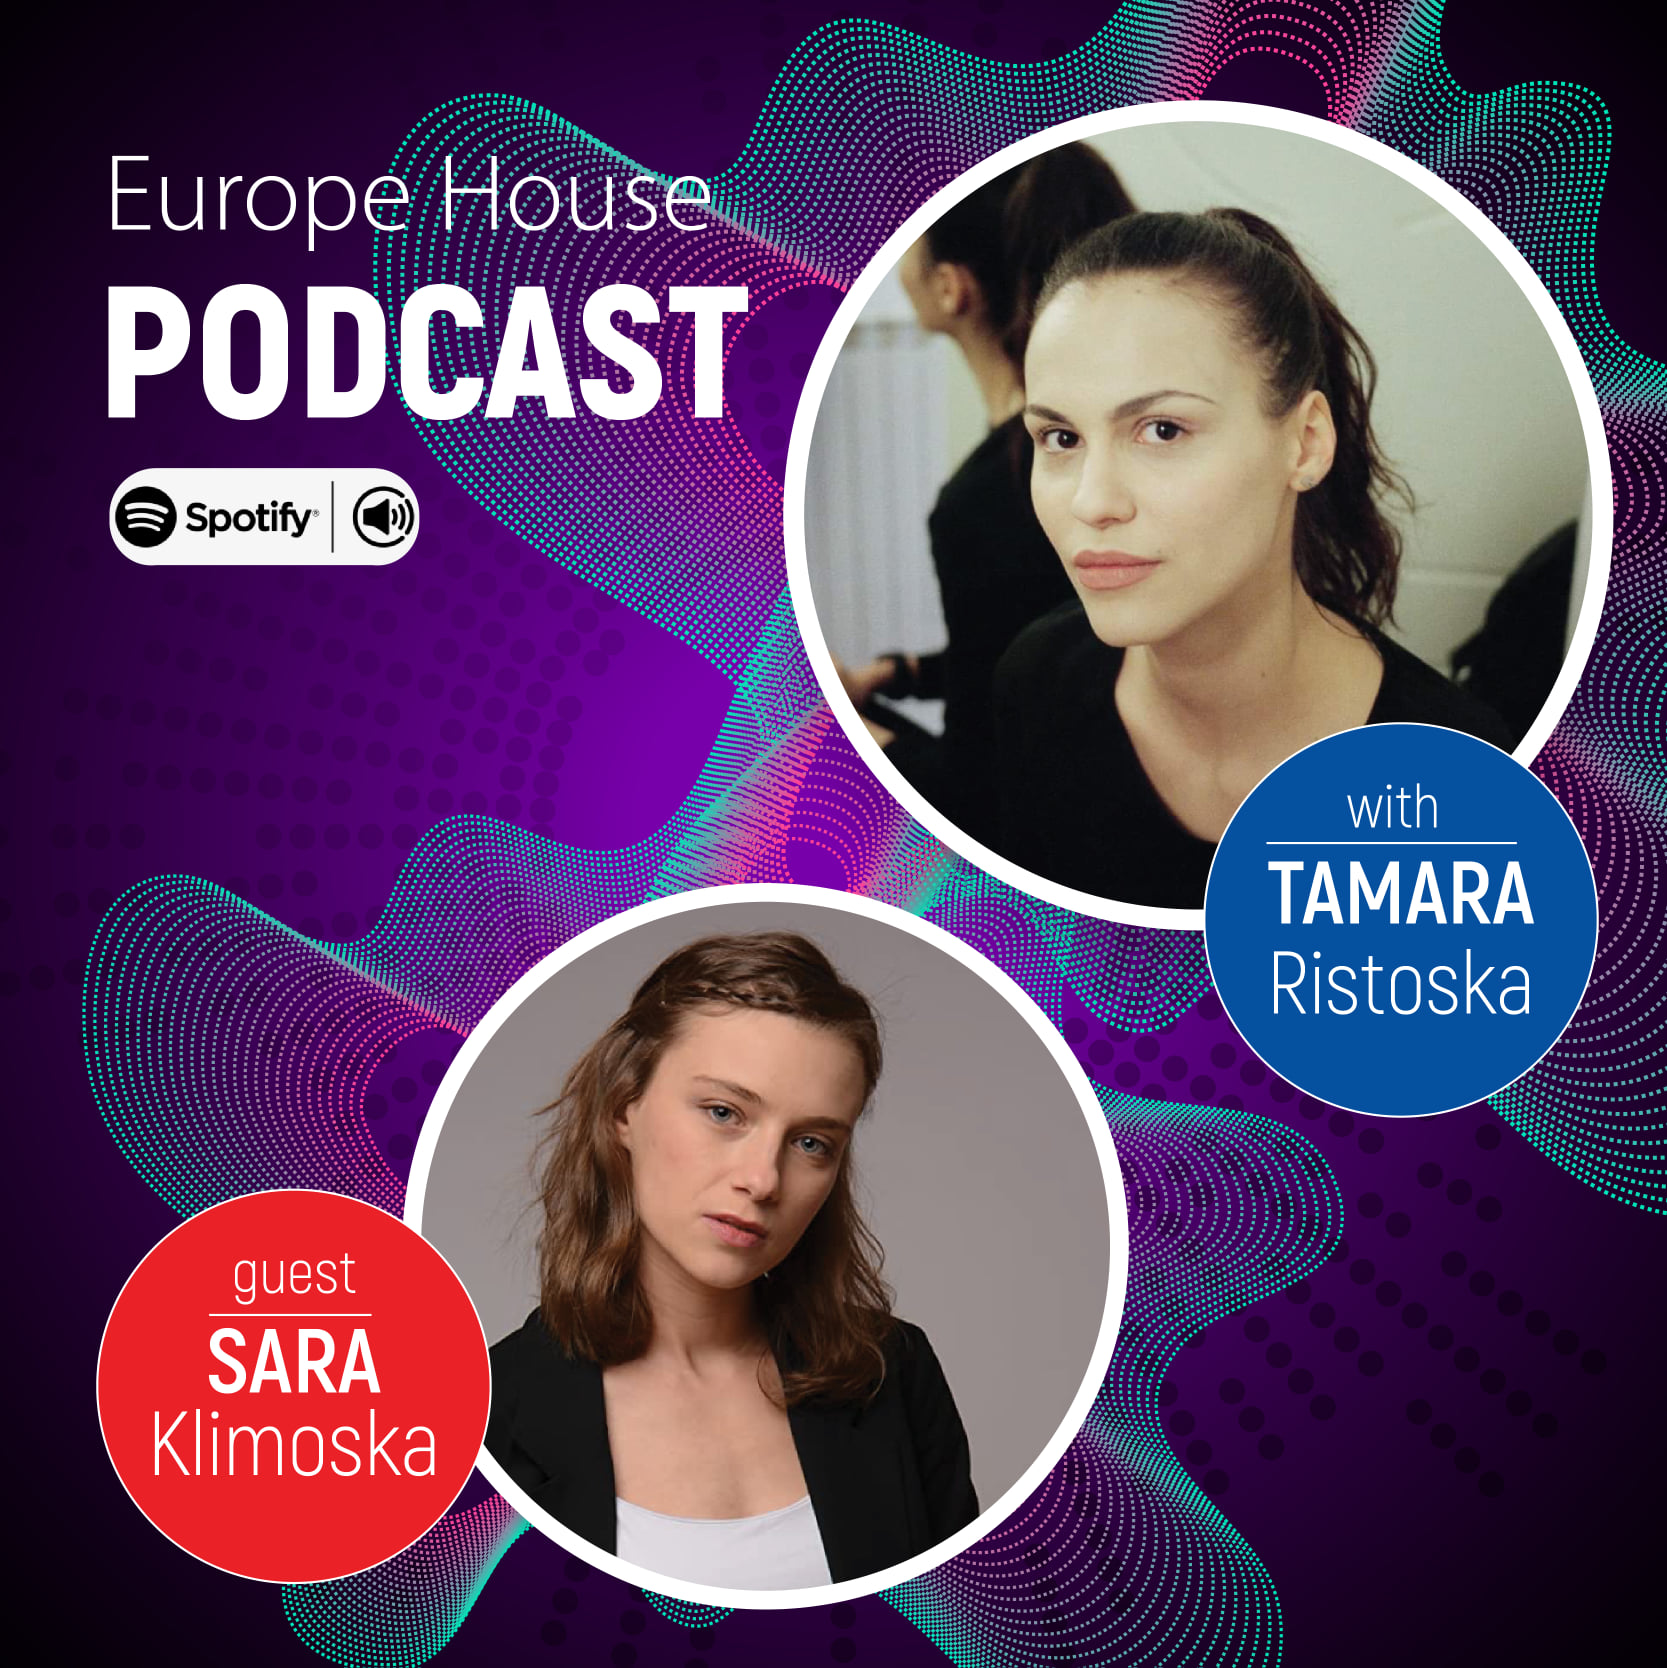 Podcast Tamara Ristoska invites actress Sara Klimoska